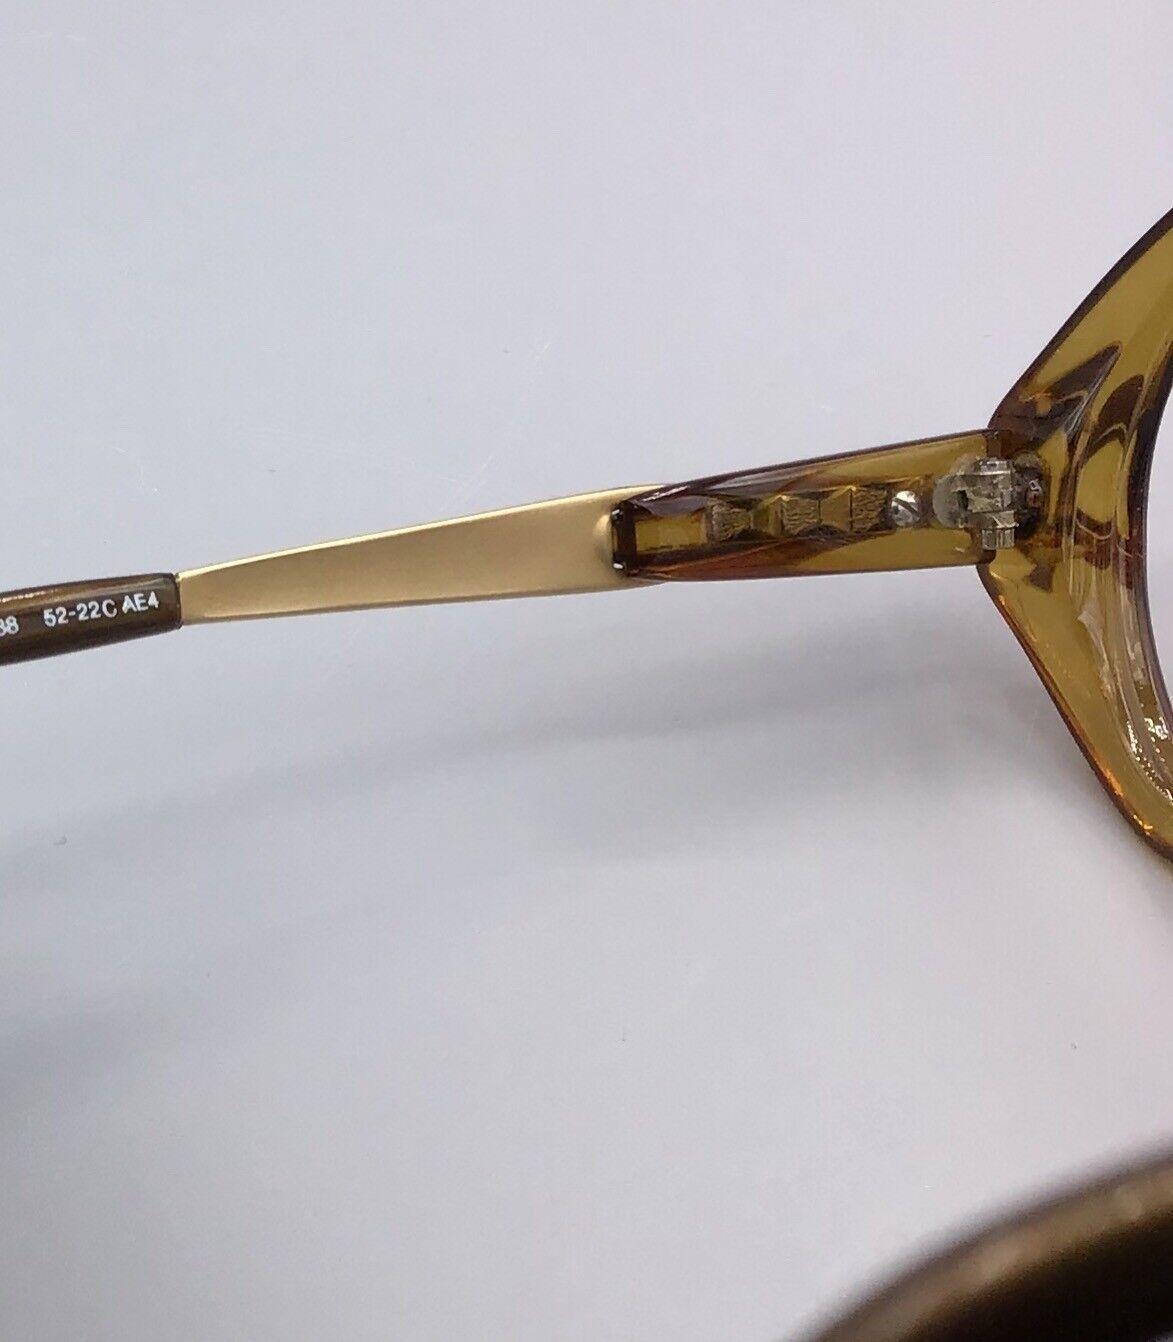 Marwitz occhiale vintage eyewear frame brillen lunettes gafas model 3028 338 AE4